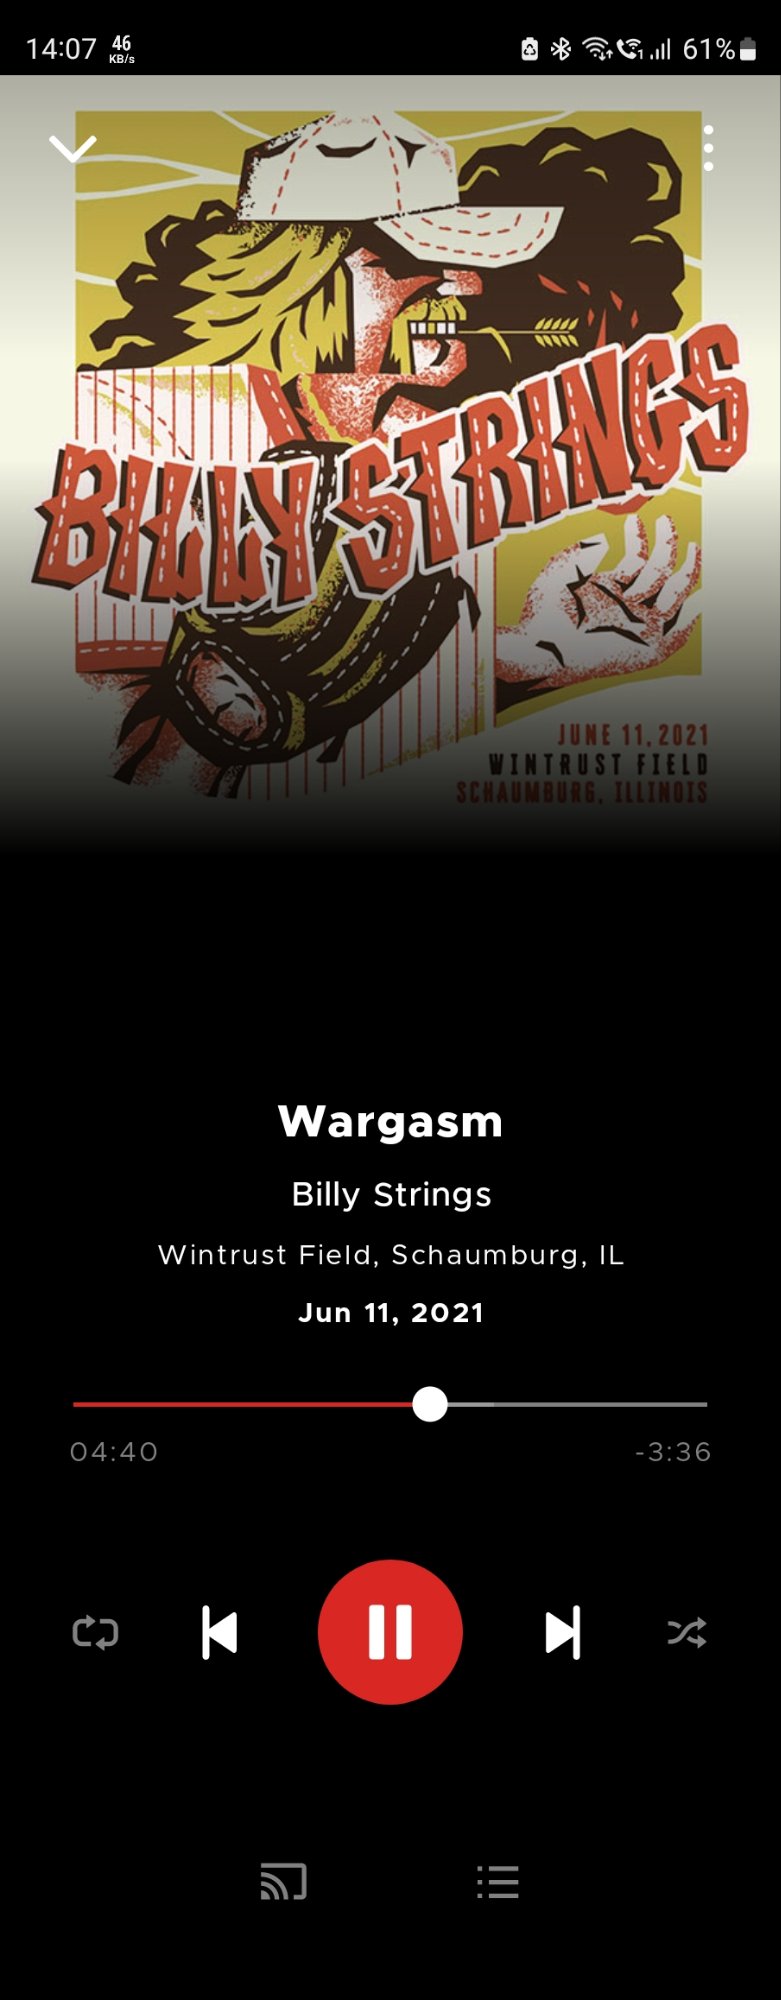 Billy strings wargasm